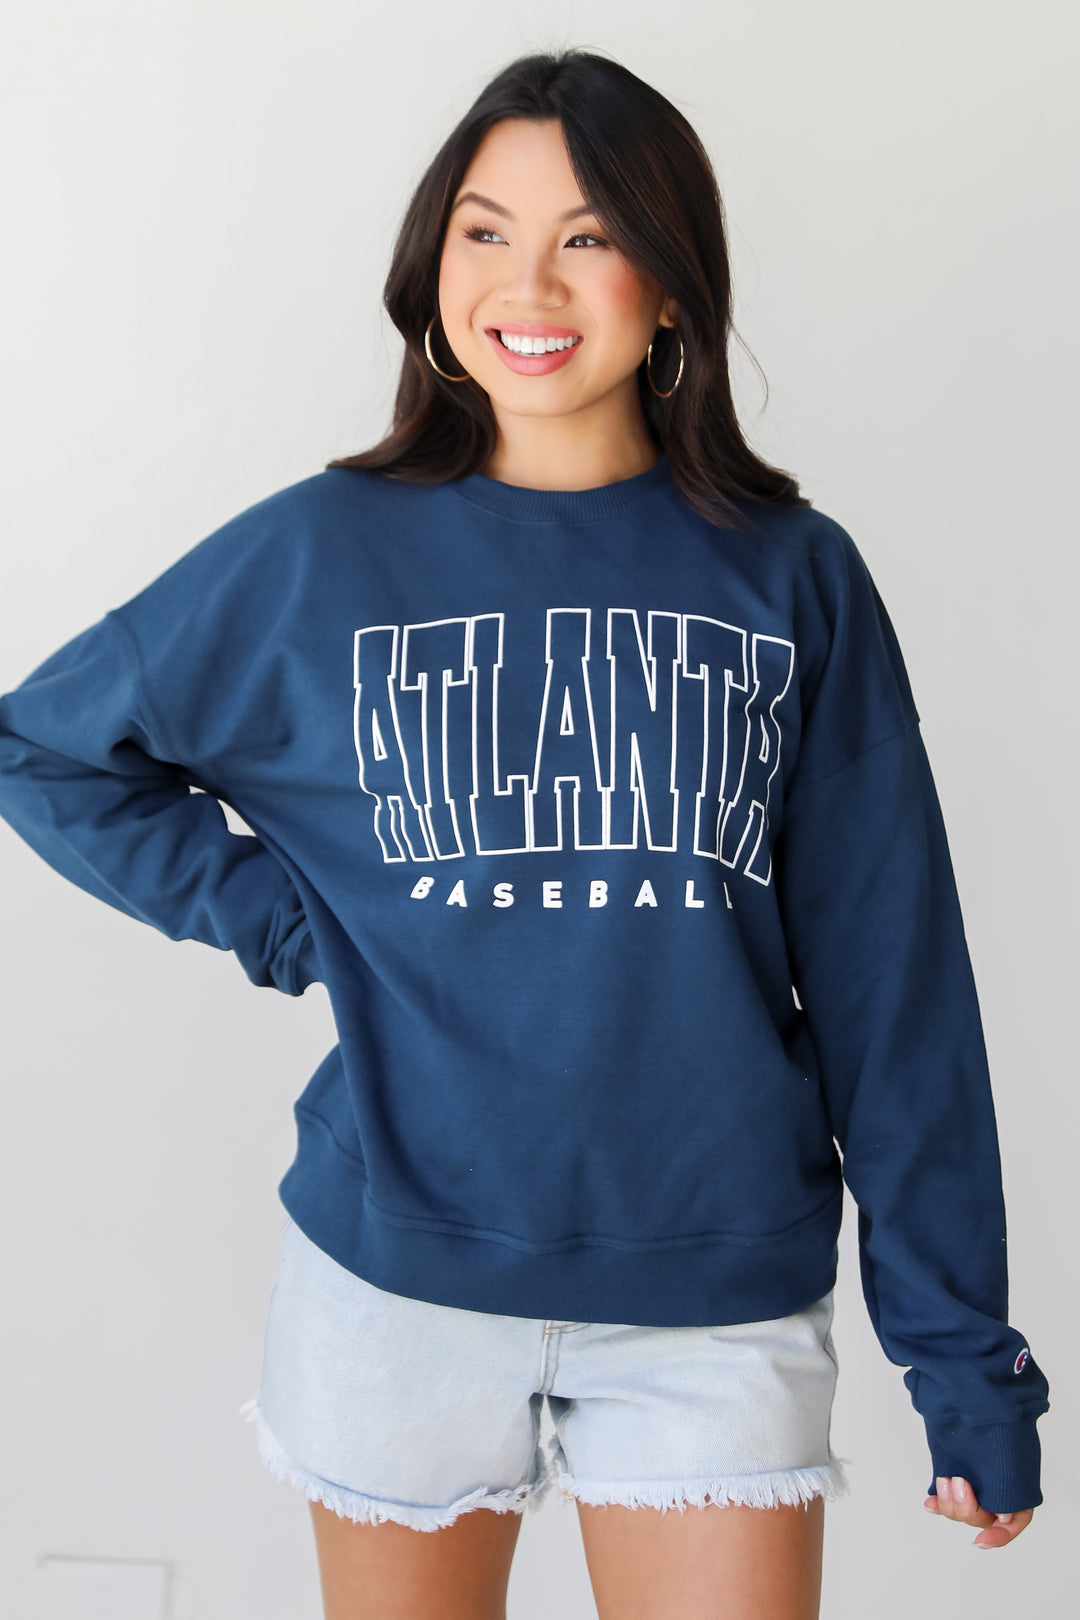 Navy Atlanta Baseball Block Letter Sweatshirt. Braves Sweatshirt. Braves Game Day Outfit Graphic.